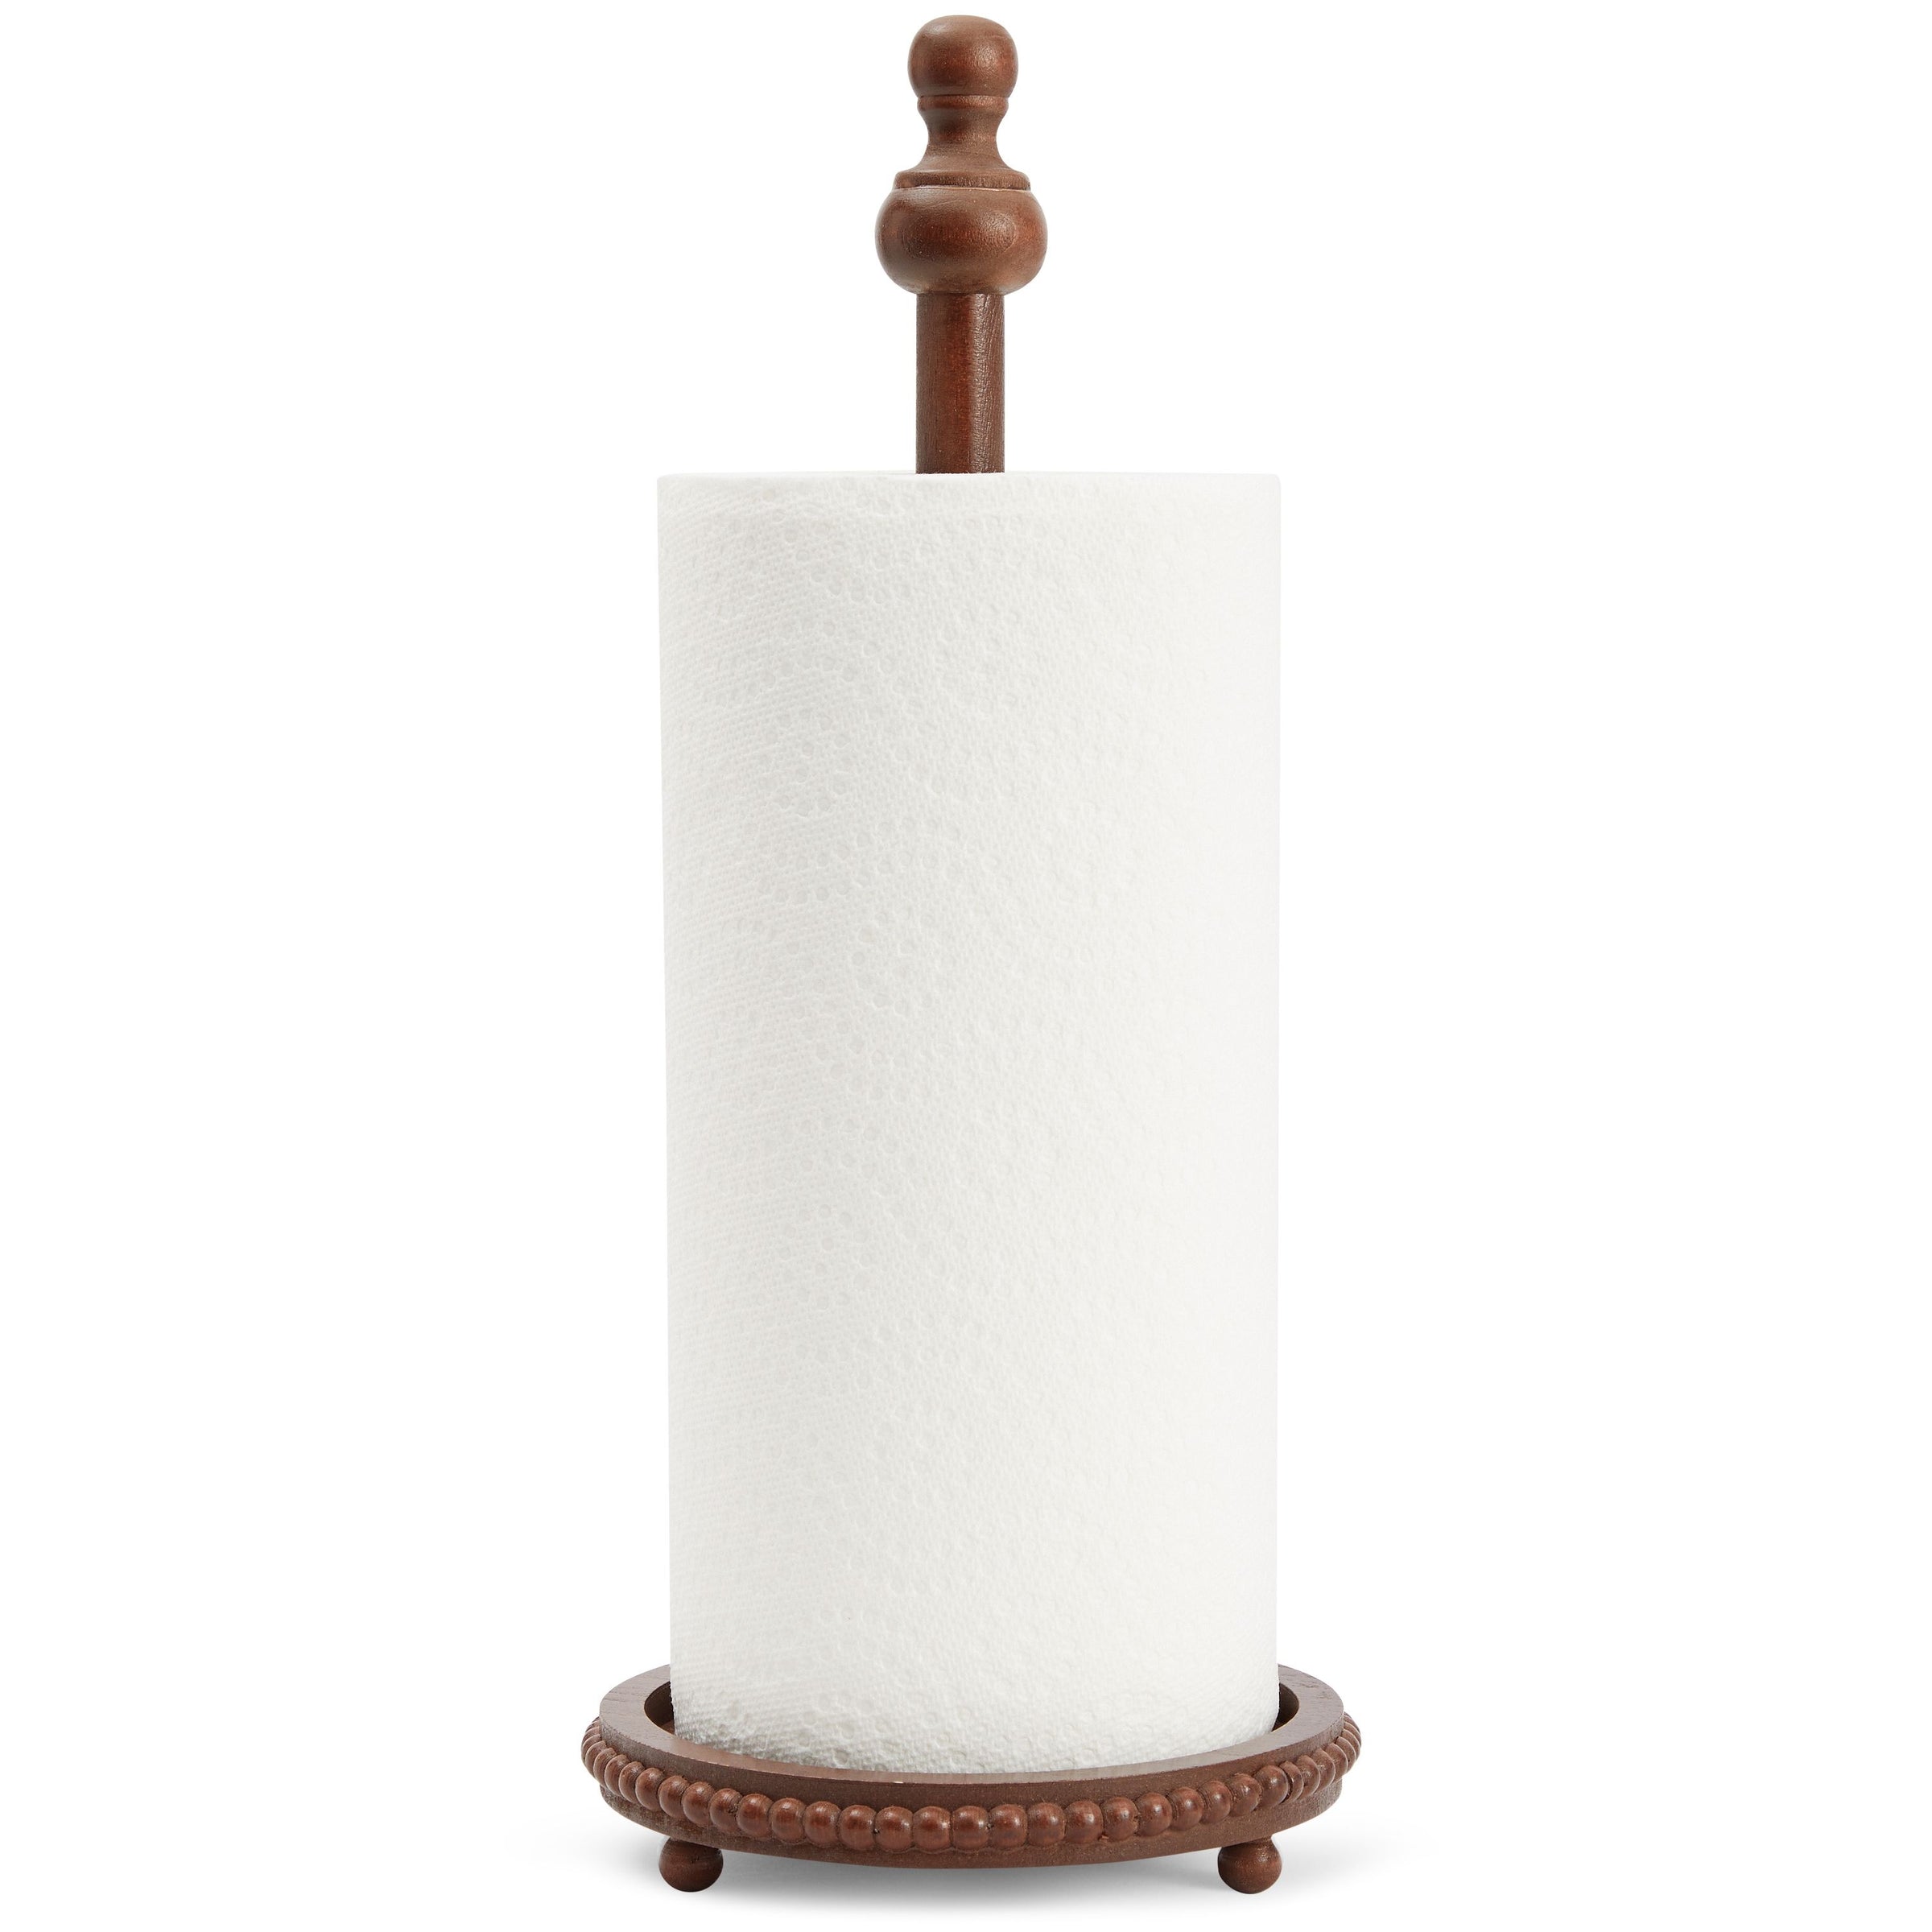 Paper Towel Holder Countertop, Wood Paper Towel Holder Stand